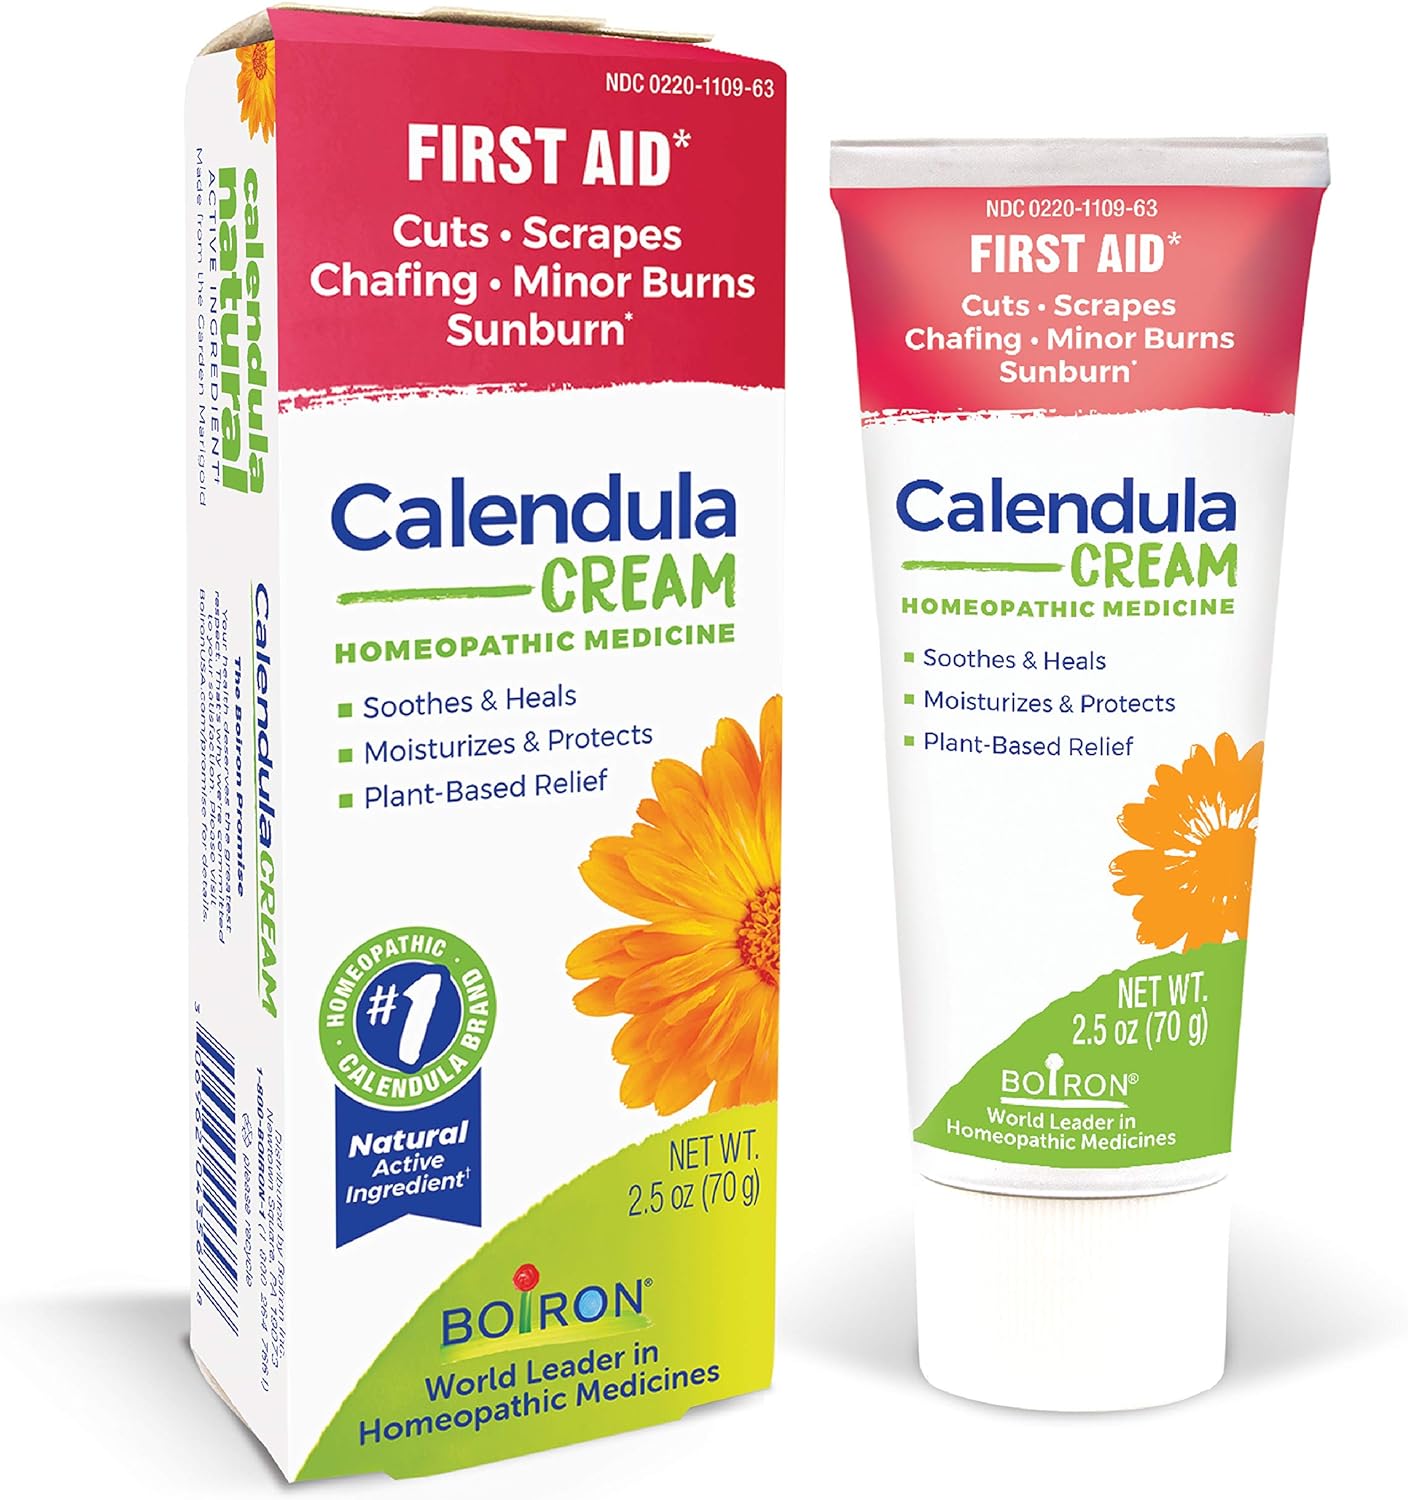 Boiron Calendula Cream for First Aid, Minor Burns, Cuts, Scrapes, Insect Bits and Sunburn - 2.5 oz